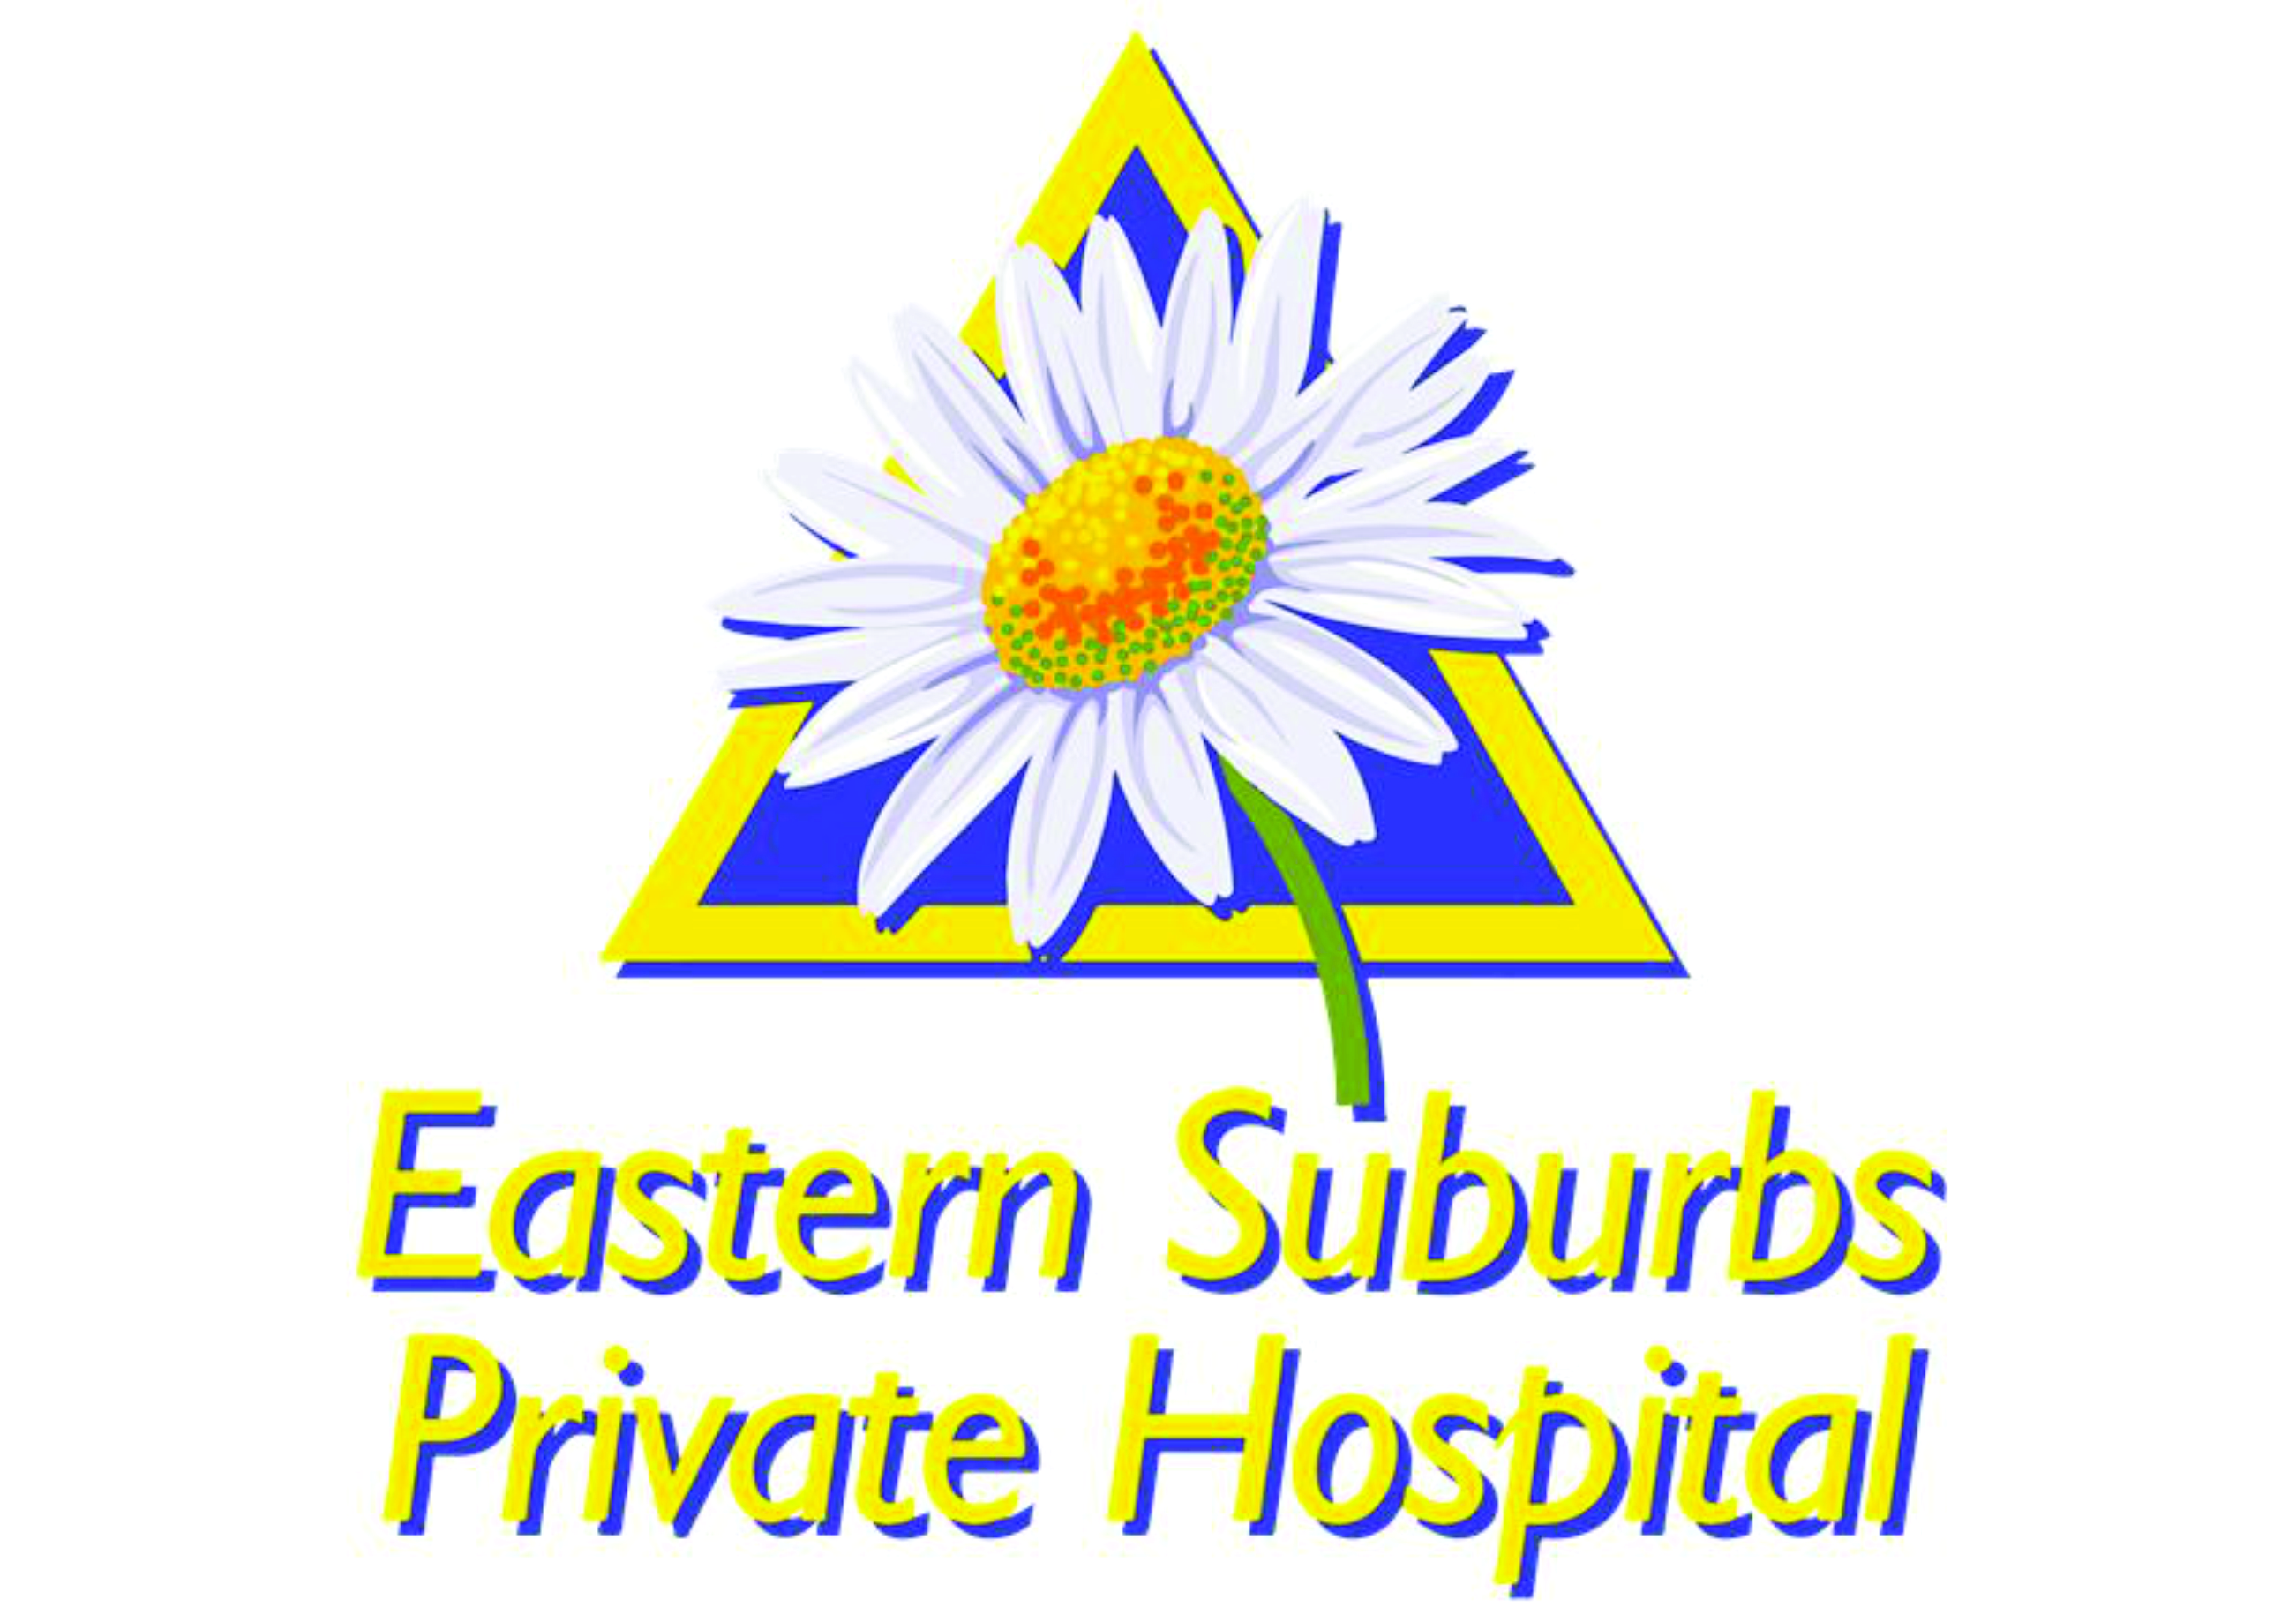 Eastern Suburbs Private Hospital